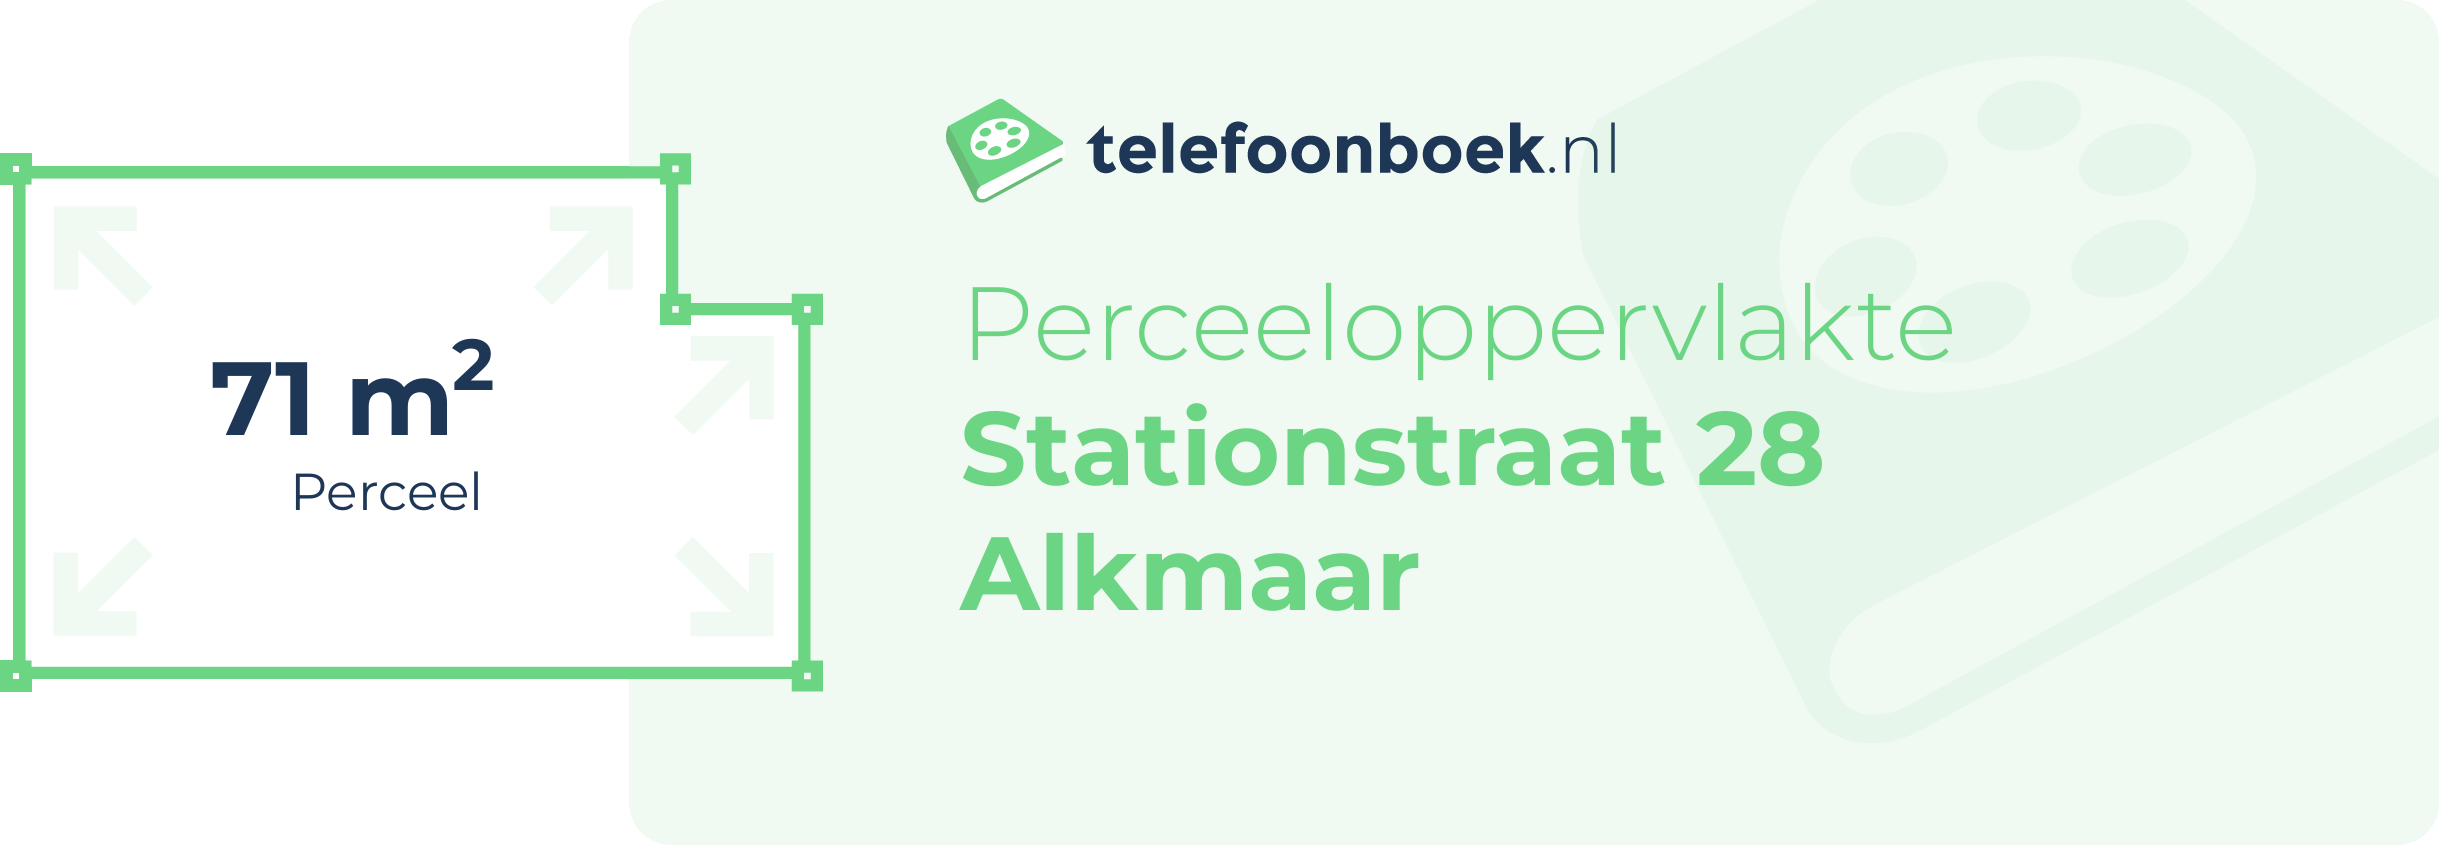 Perceeloppervlakte Stationstraat 28 Alkmaar